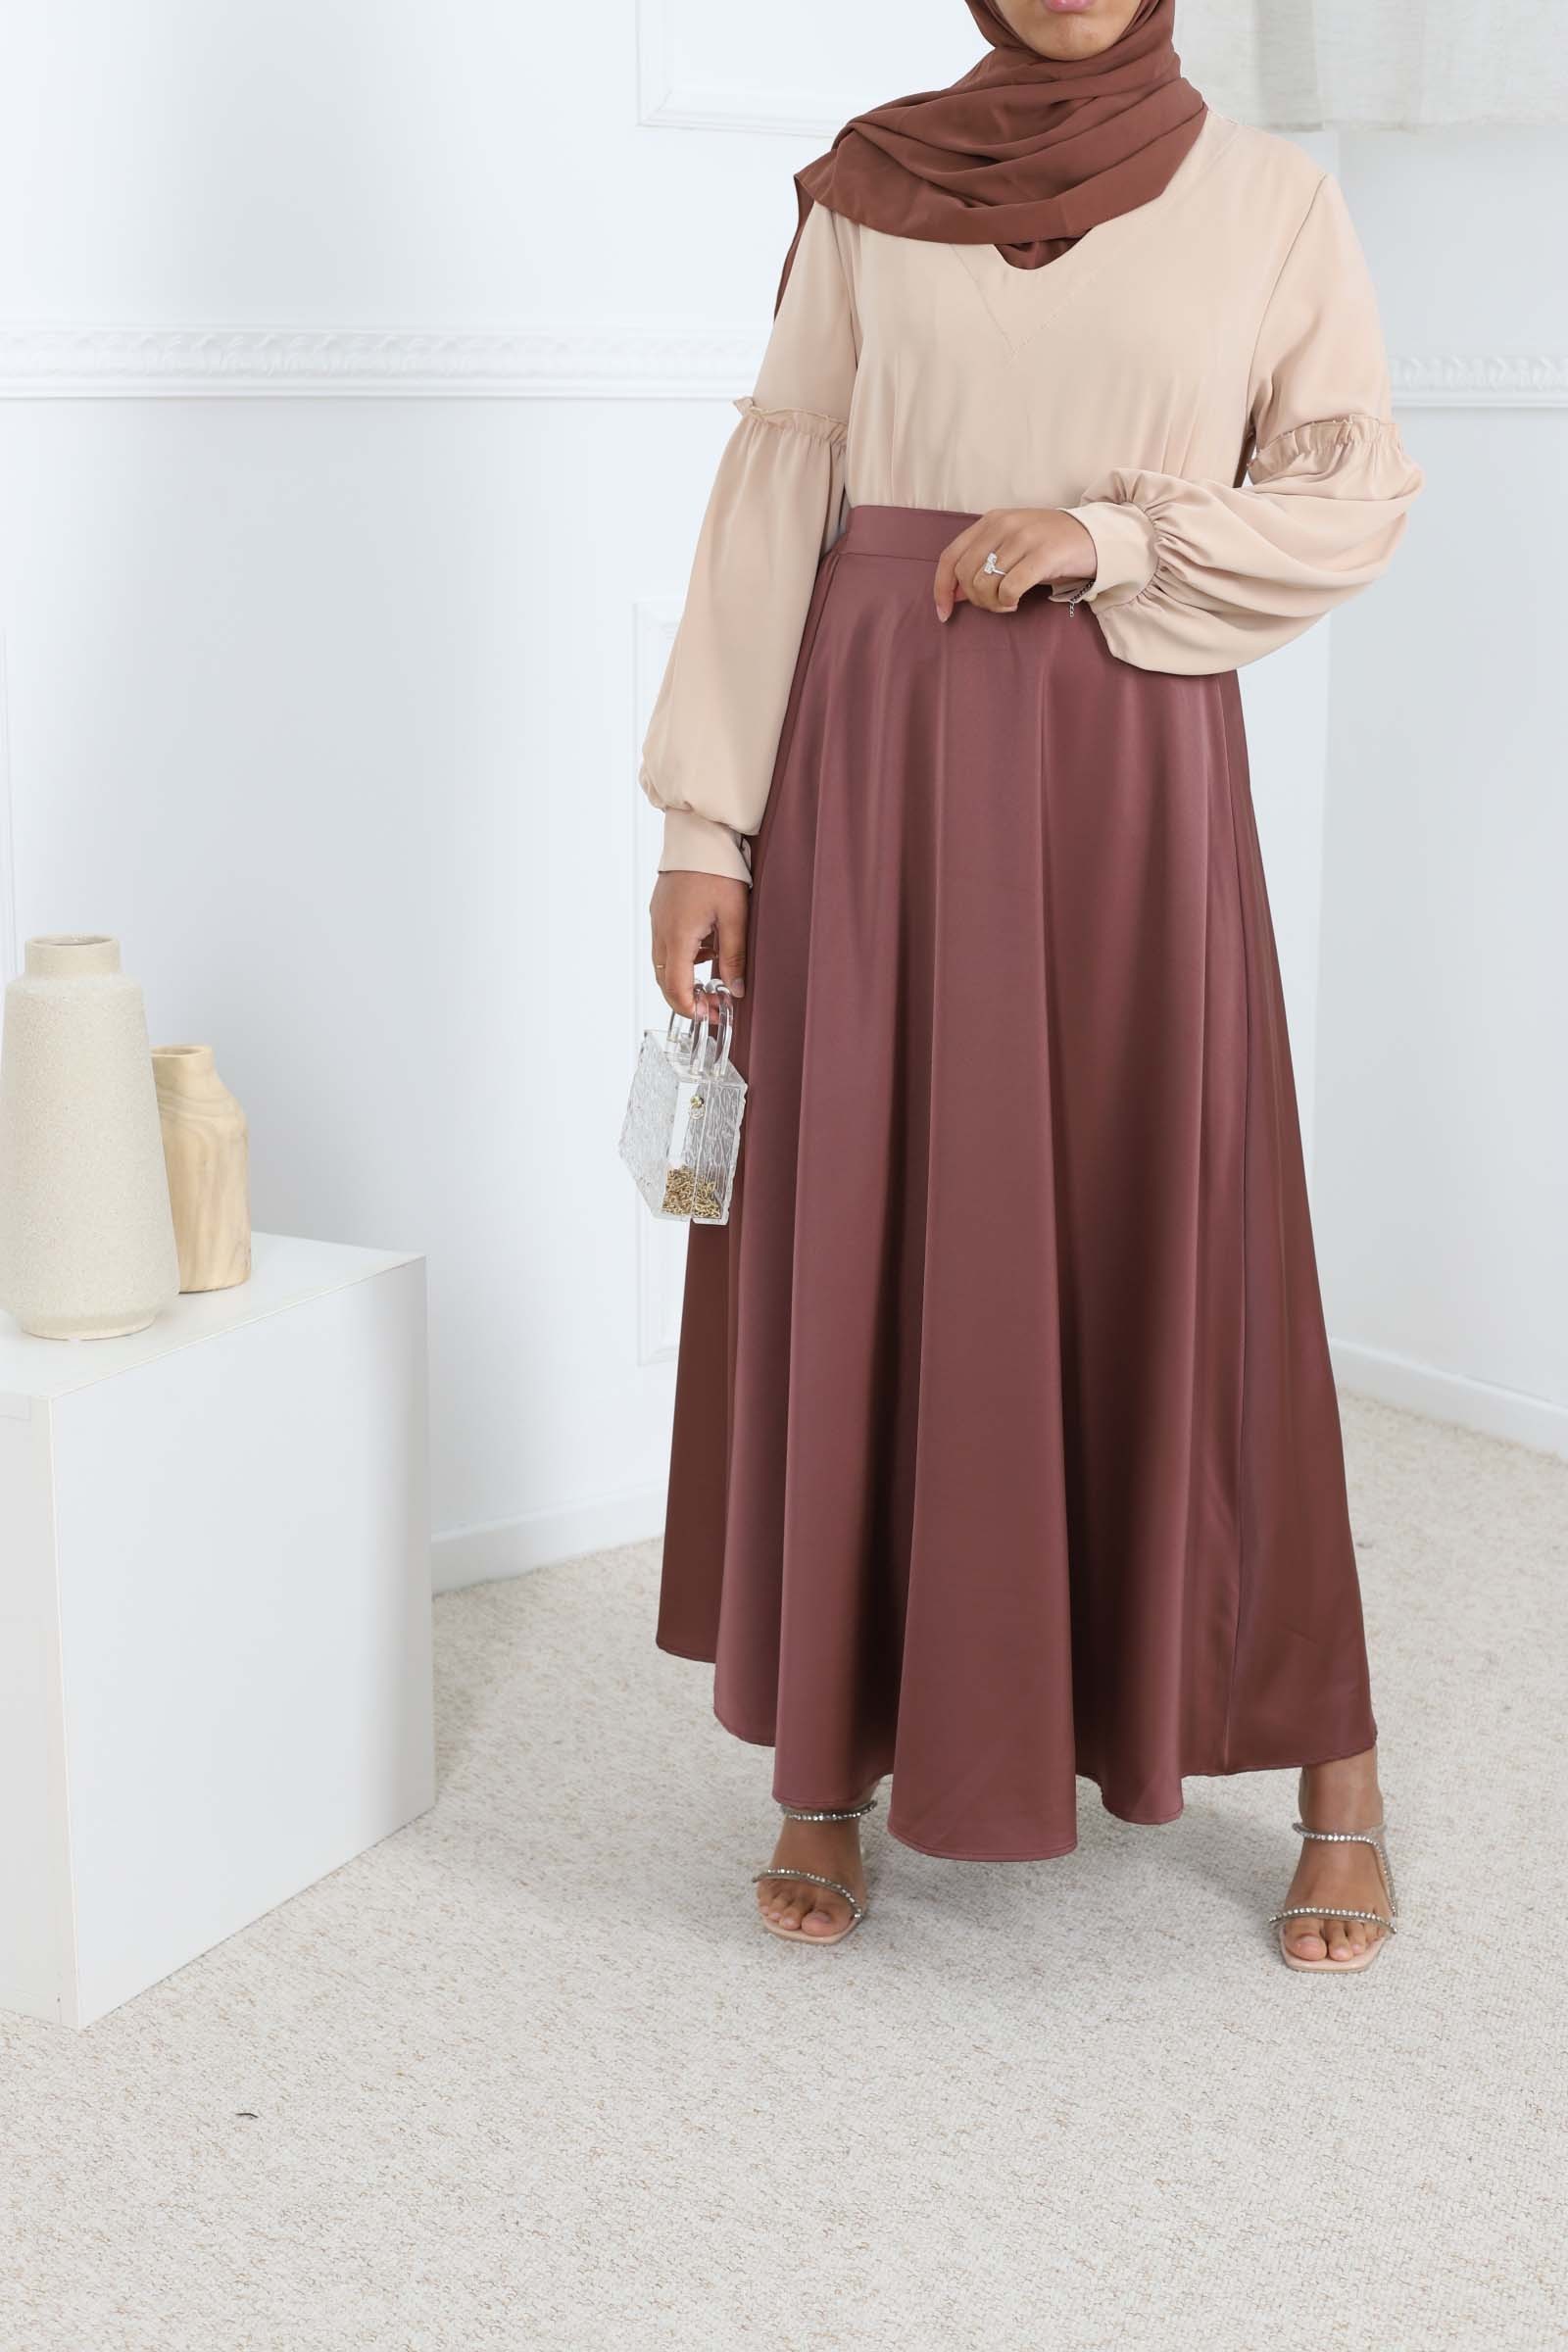 Jupe taille haute musulmane hijab mode islamique , jupe évasée femme